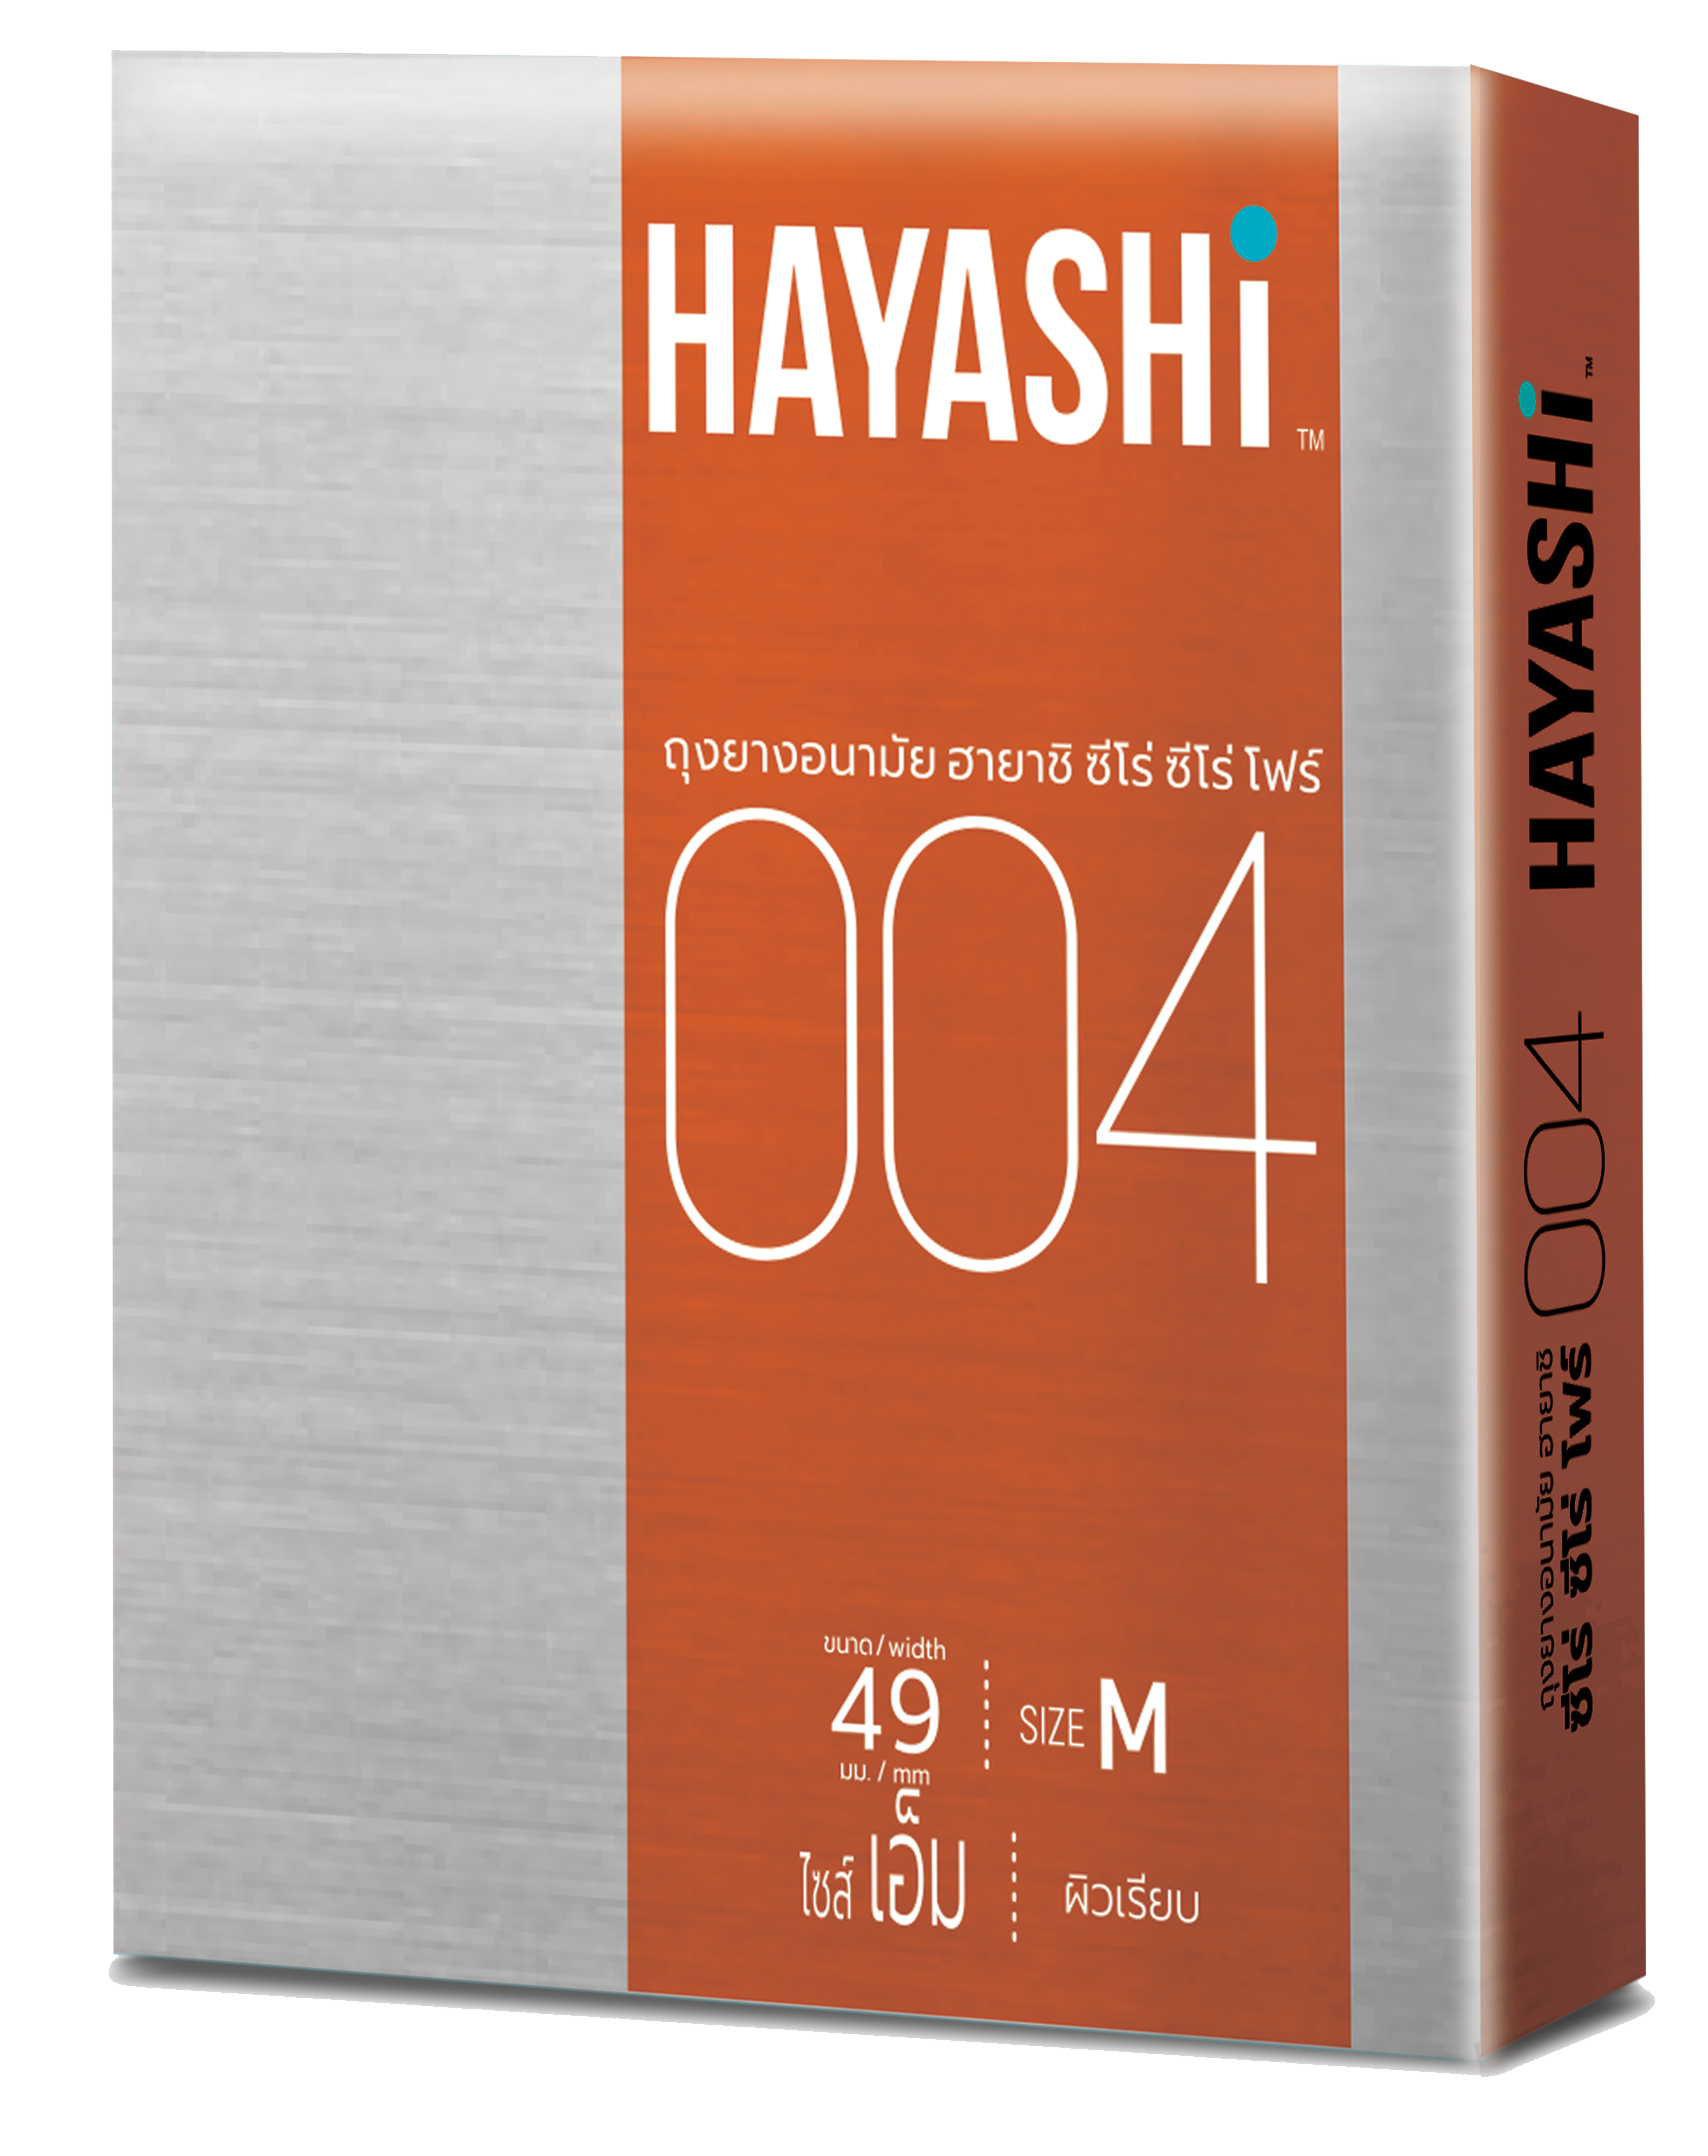 Hayashi 004